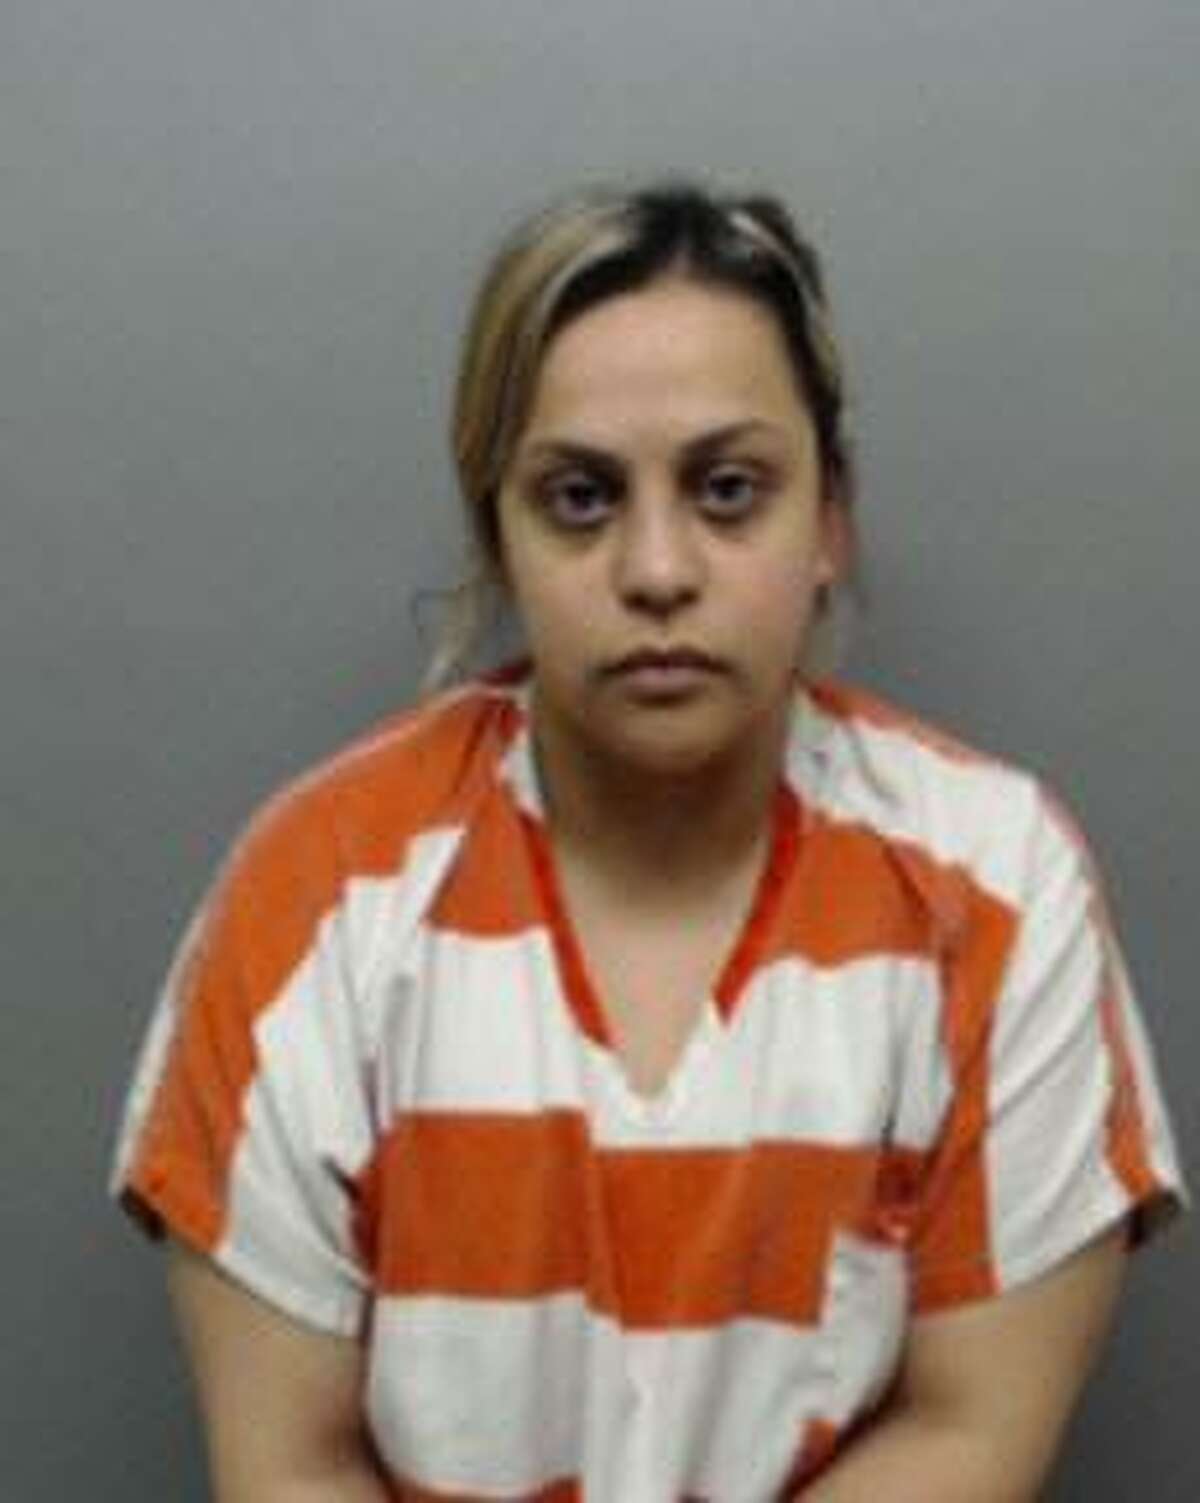 Authorities allege Lily Dale Cruz bit her boyfriend over a jealousy spat.